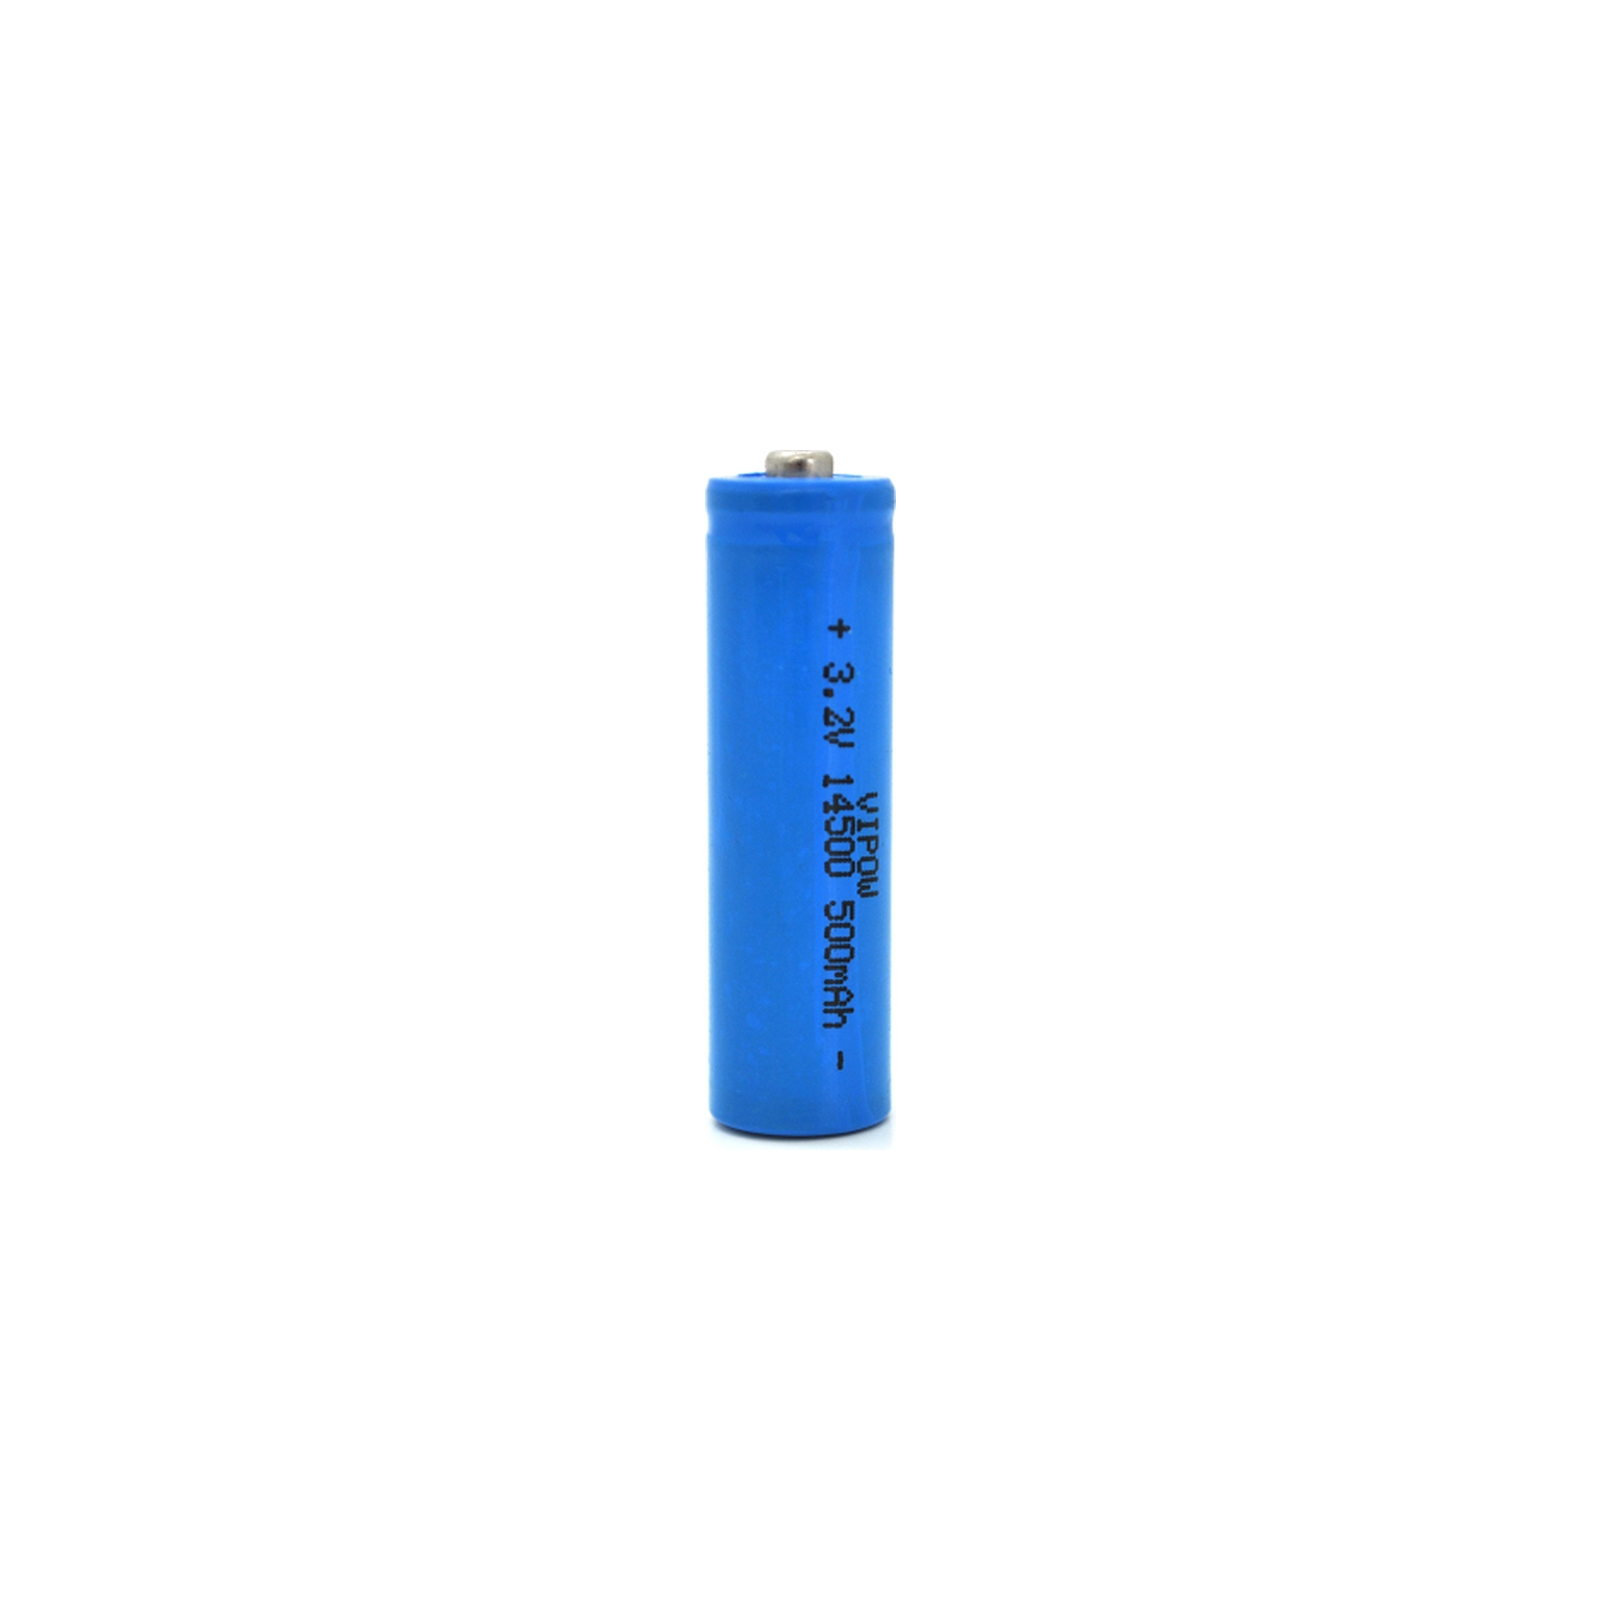 Аккумулятор 14500 LiFePO4 (size AA), 500mAh, 3.2V, TipTop, blue Vipow (IFR14500-500mAhTT / 21439)